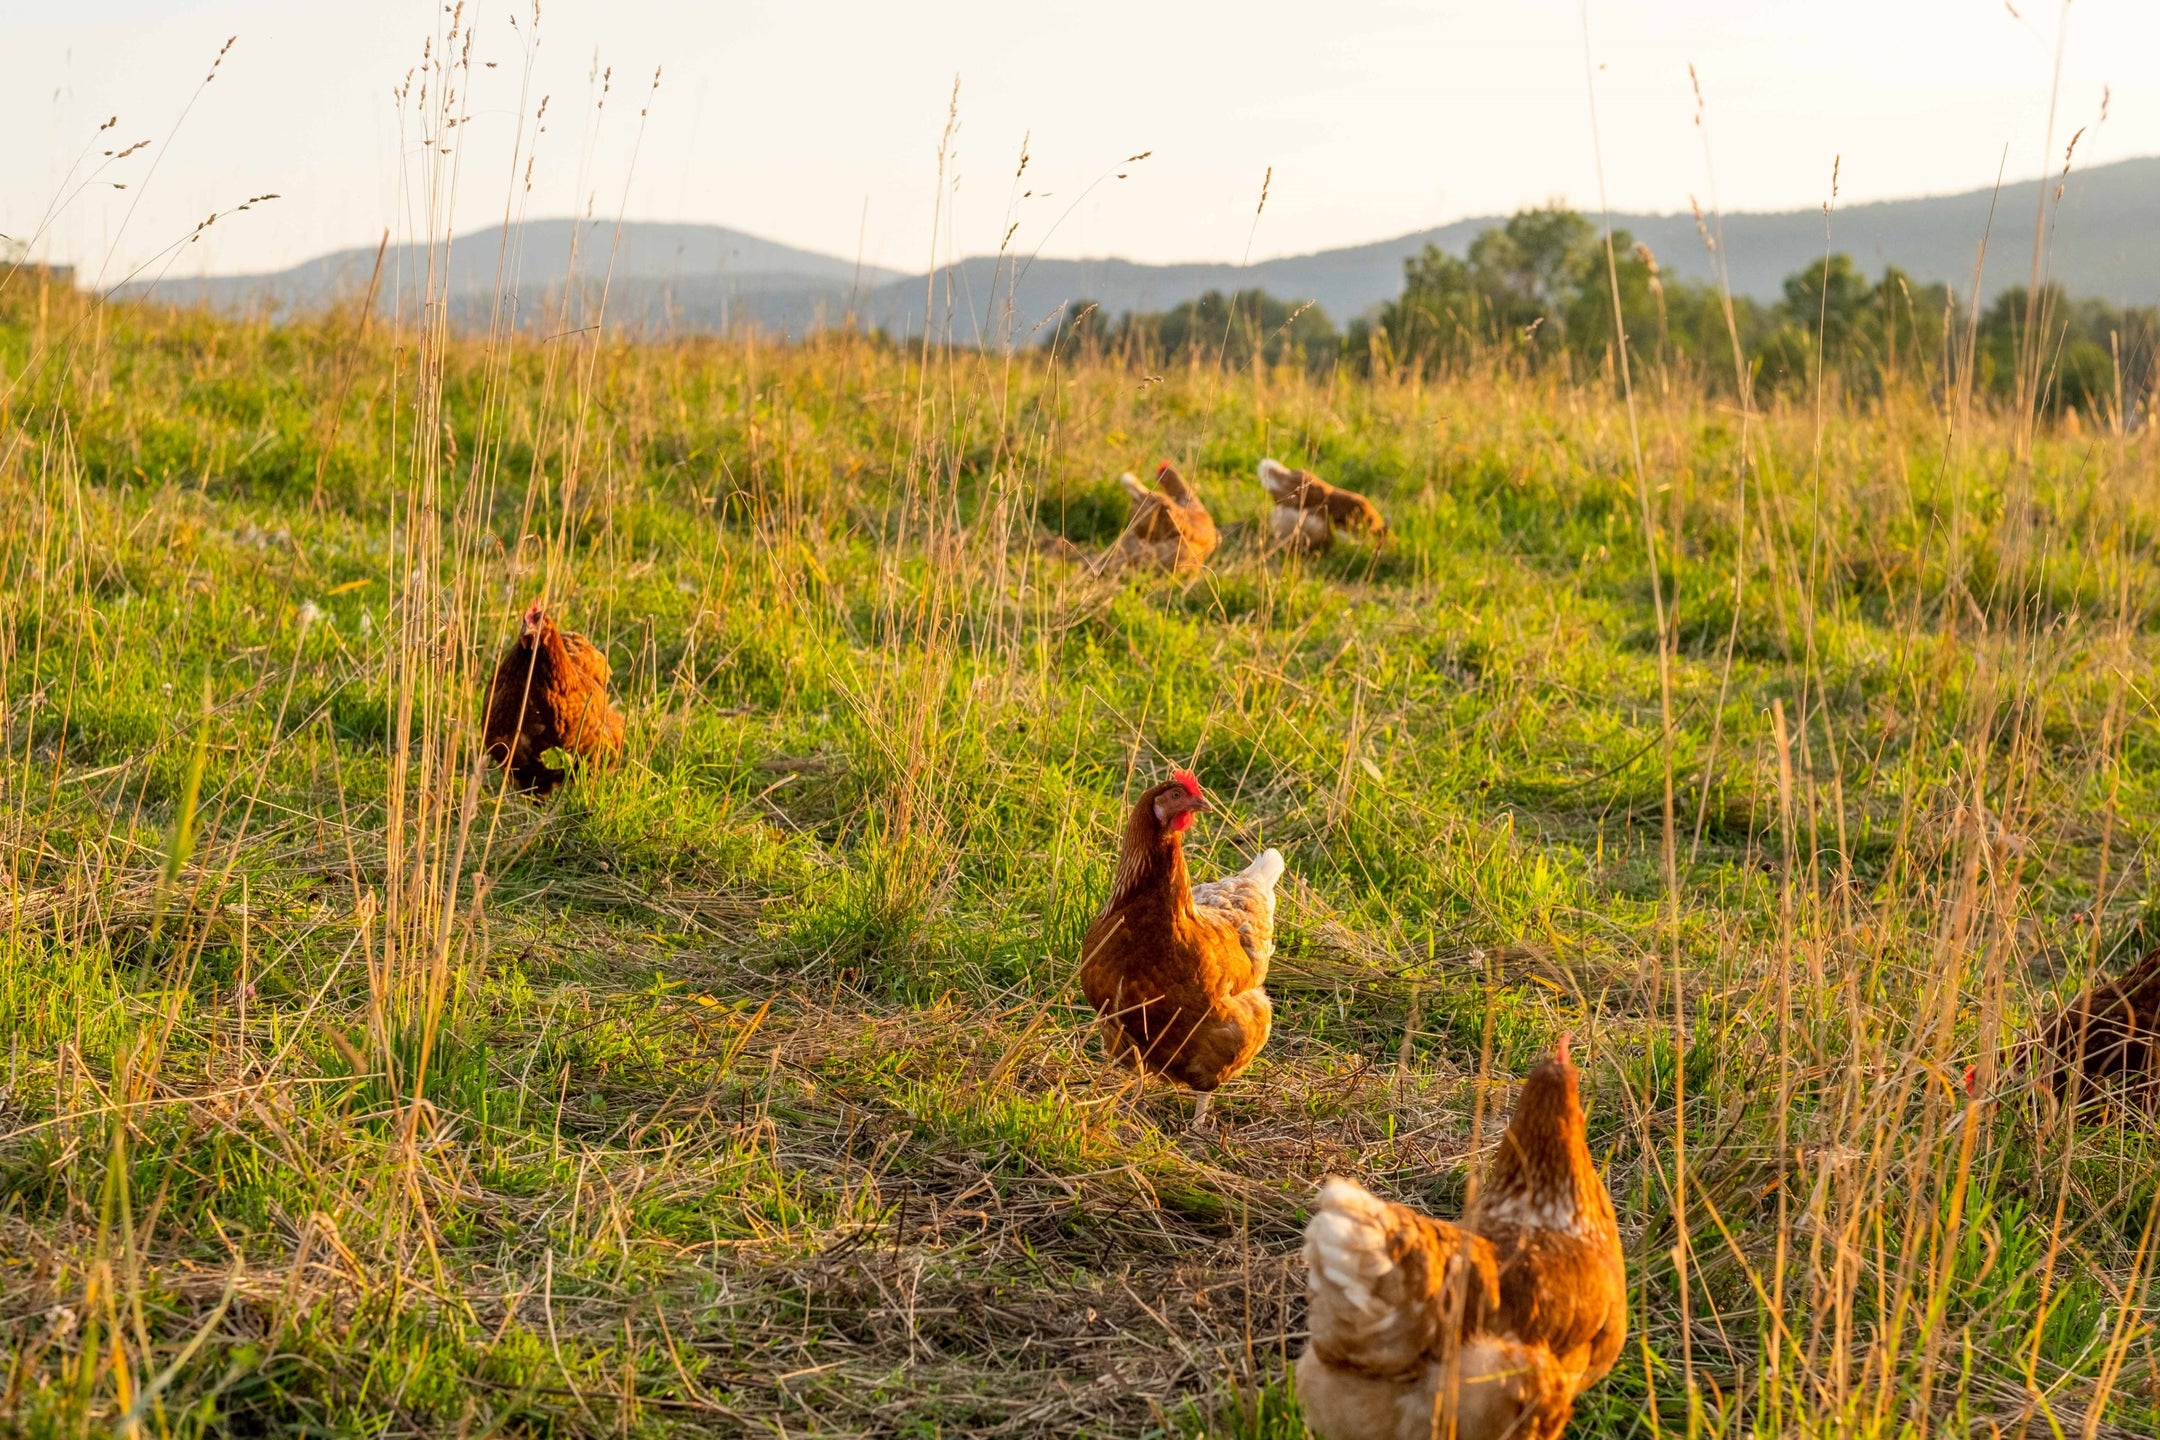 Brown chickens in a grassy field